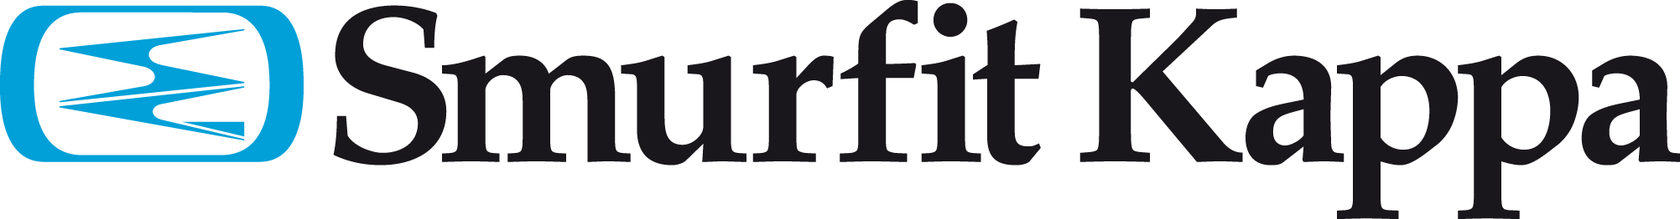 Smurfit_Kappa_logo_2